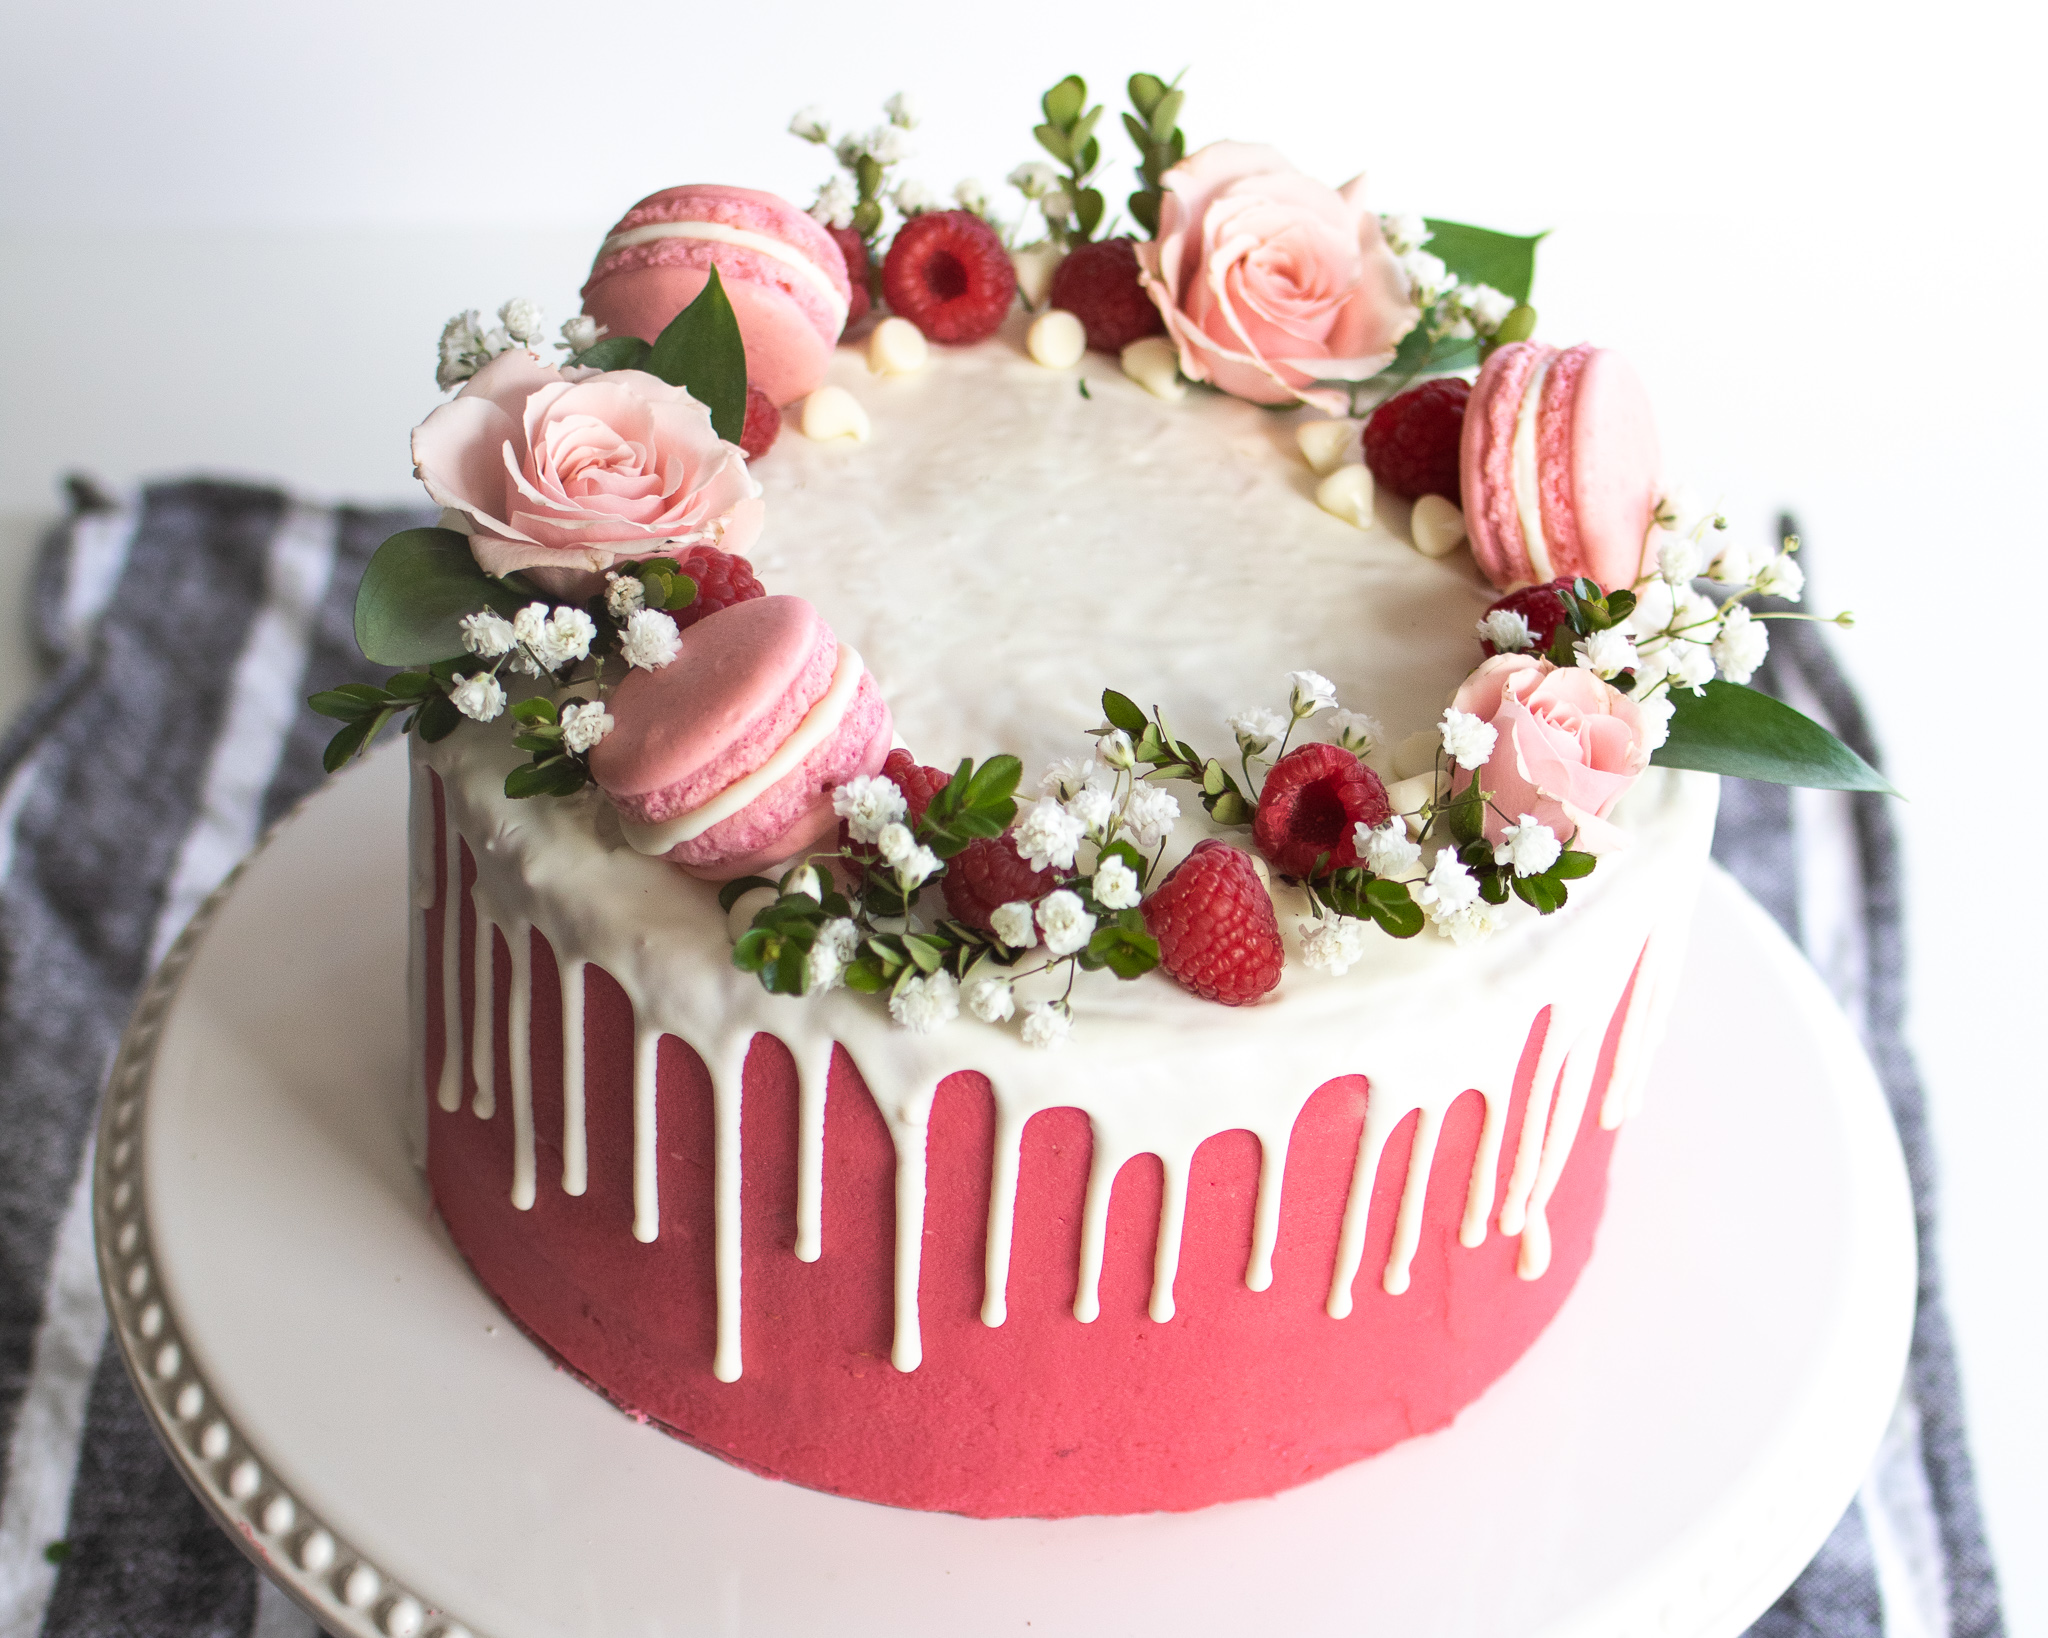 White chocolate & raspberry cake